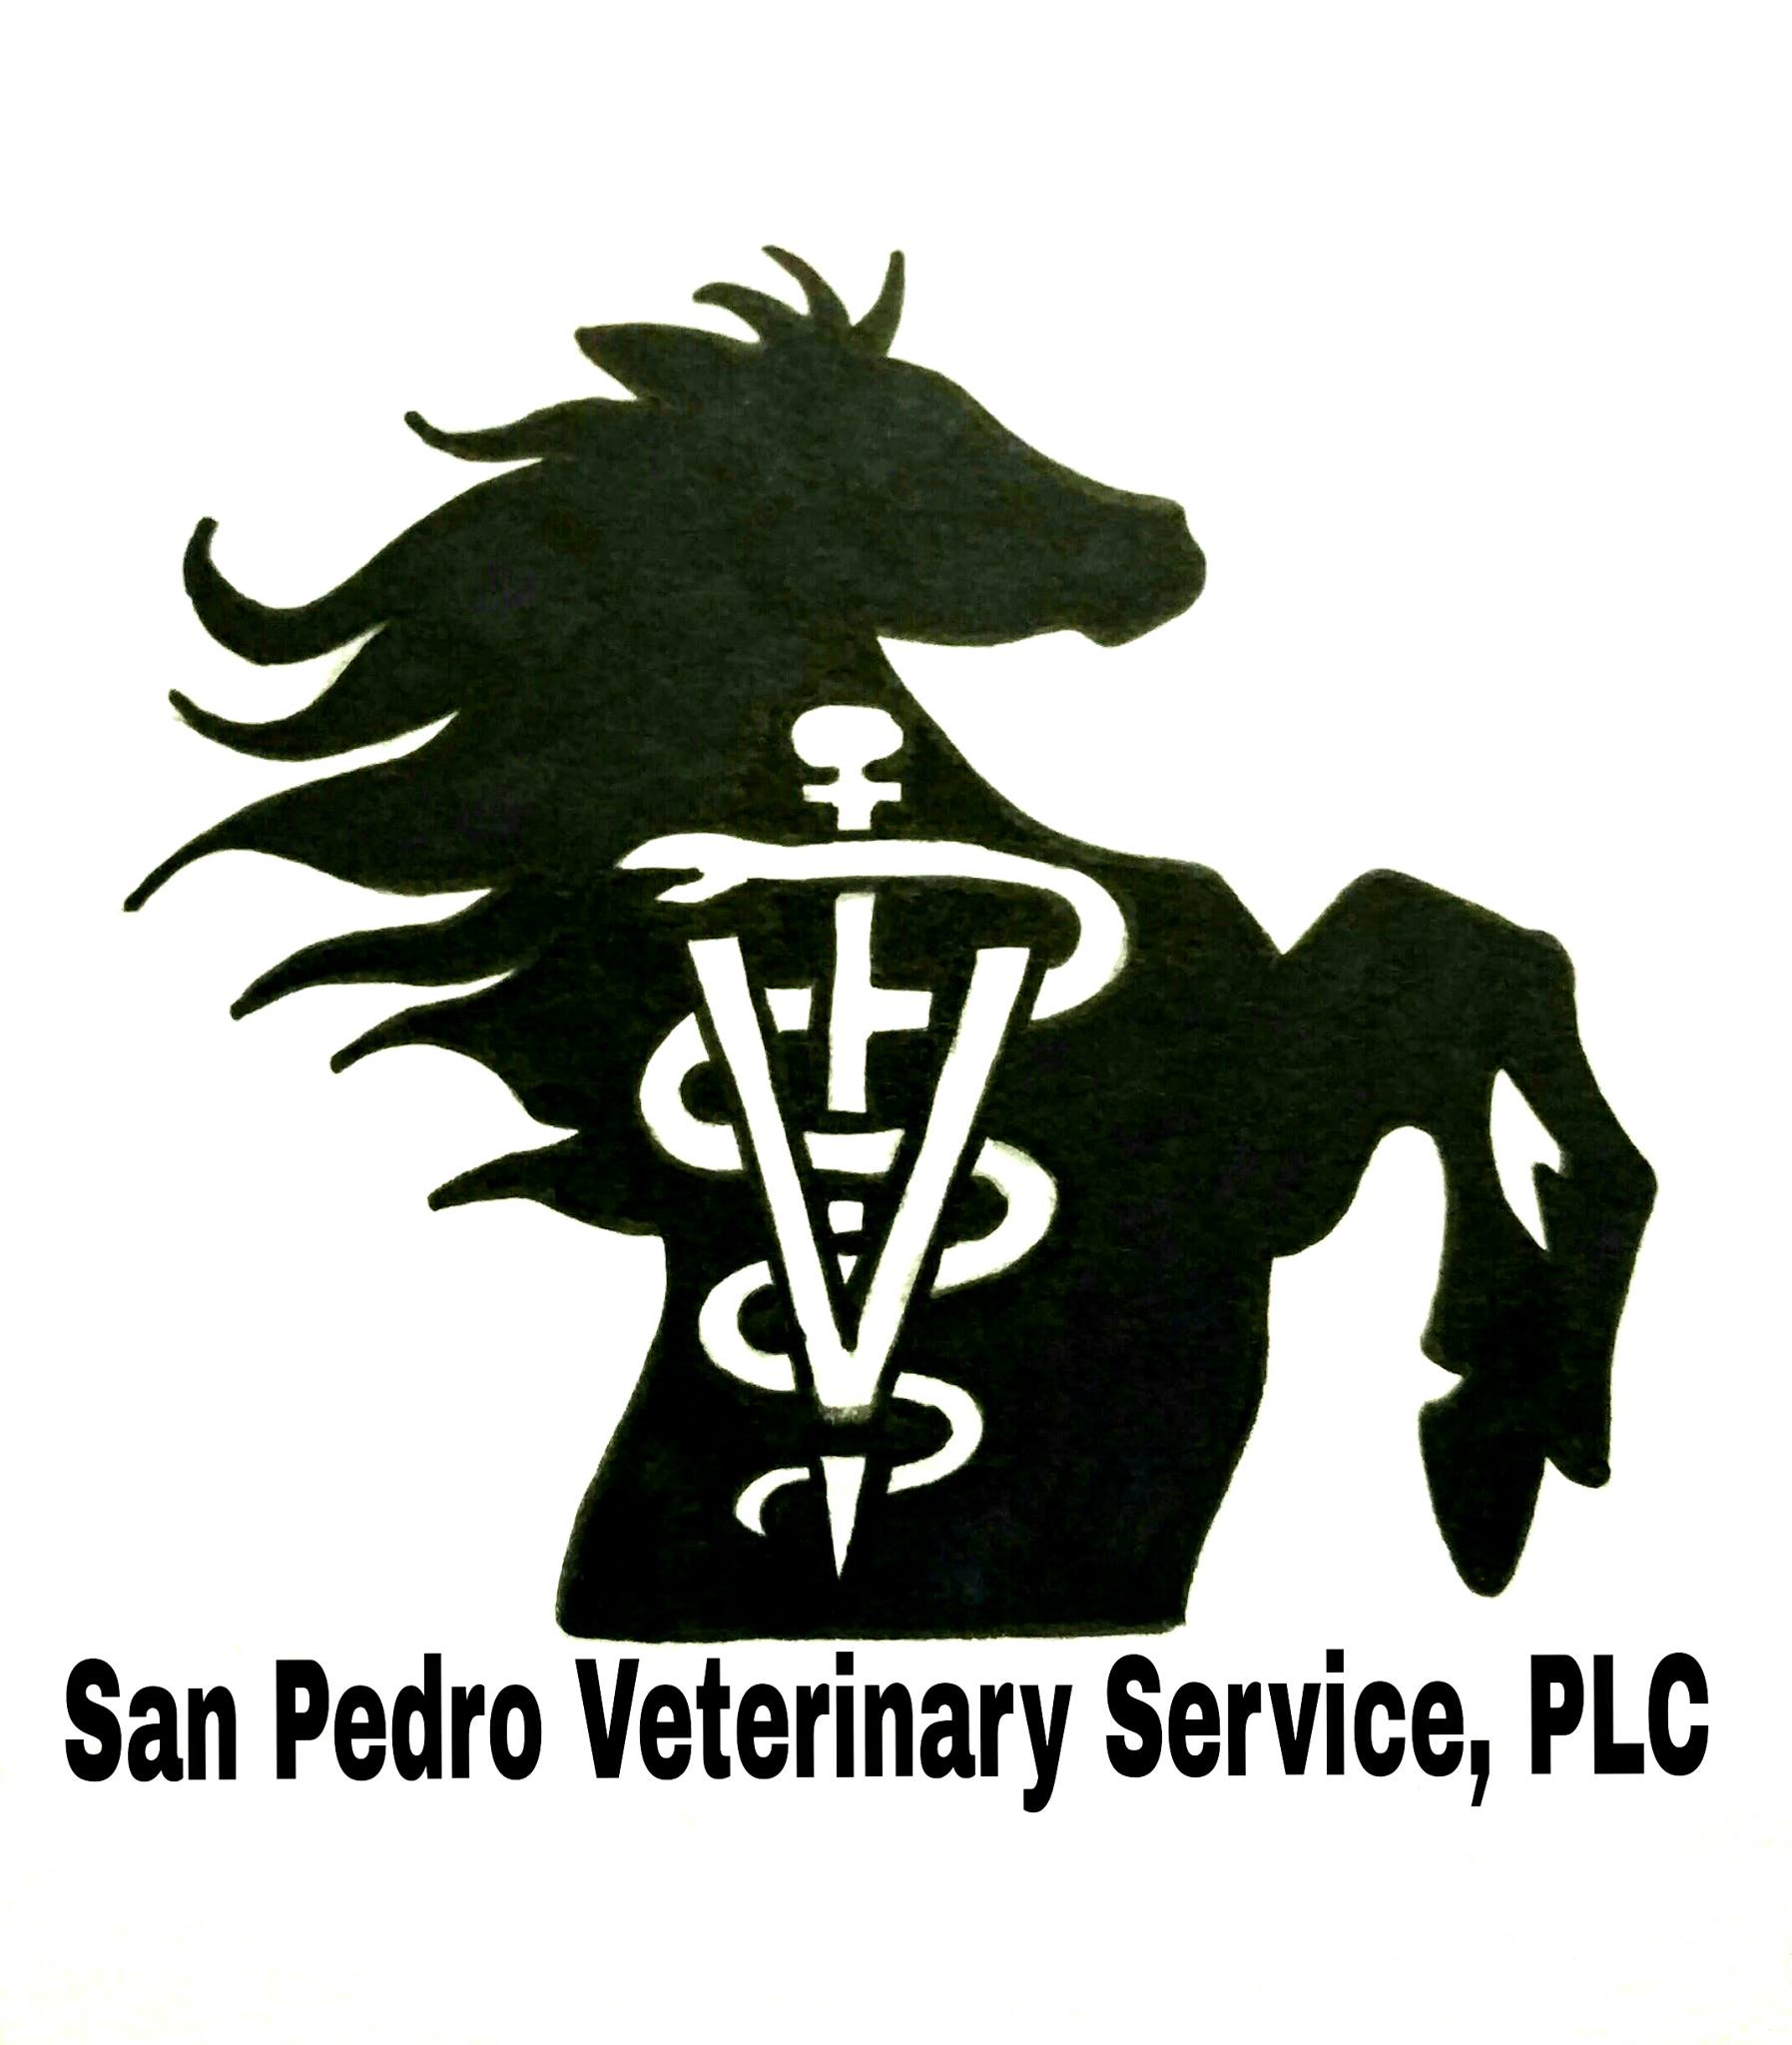 San Pedro Veterinary Service, PLC